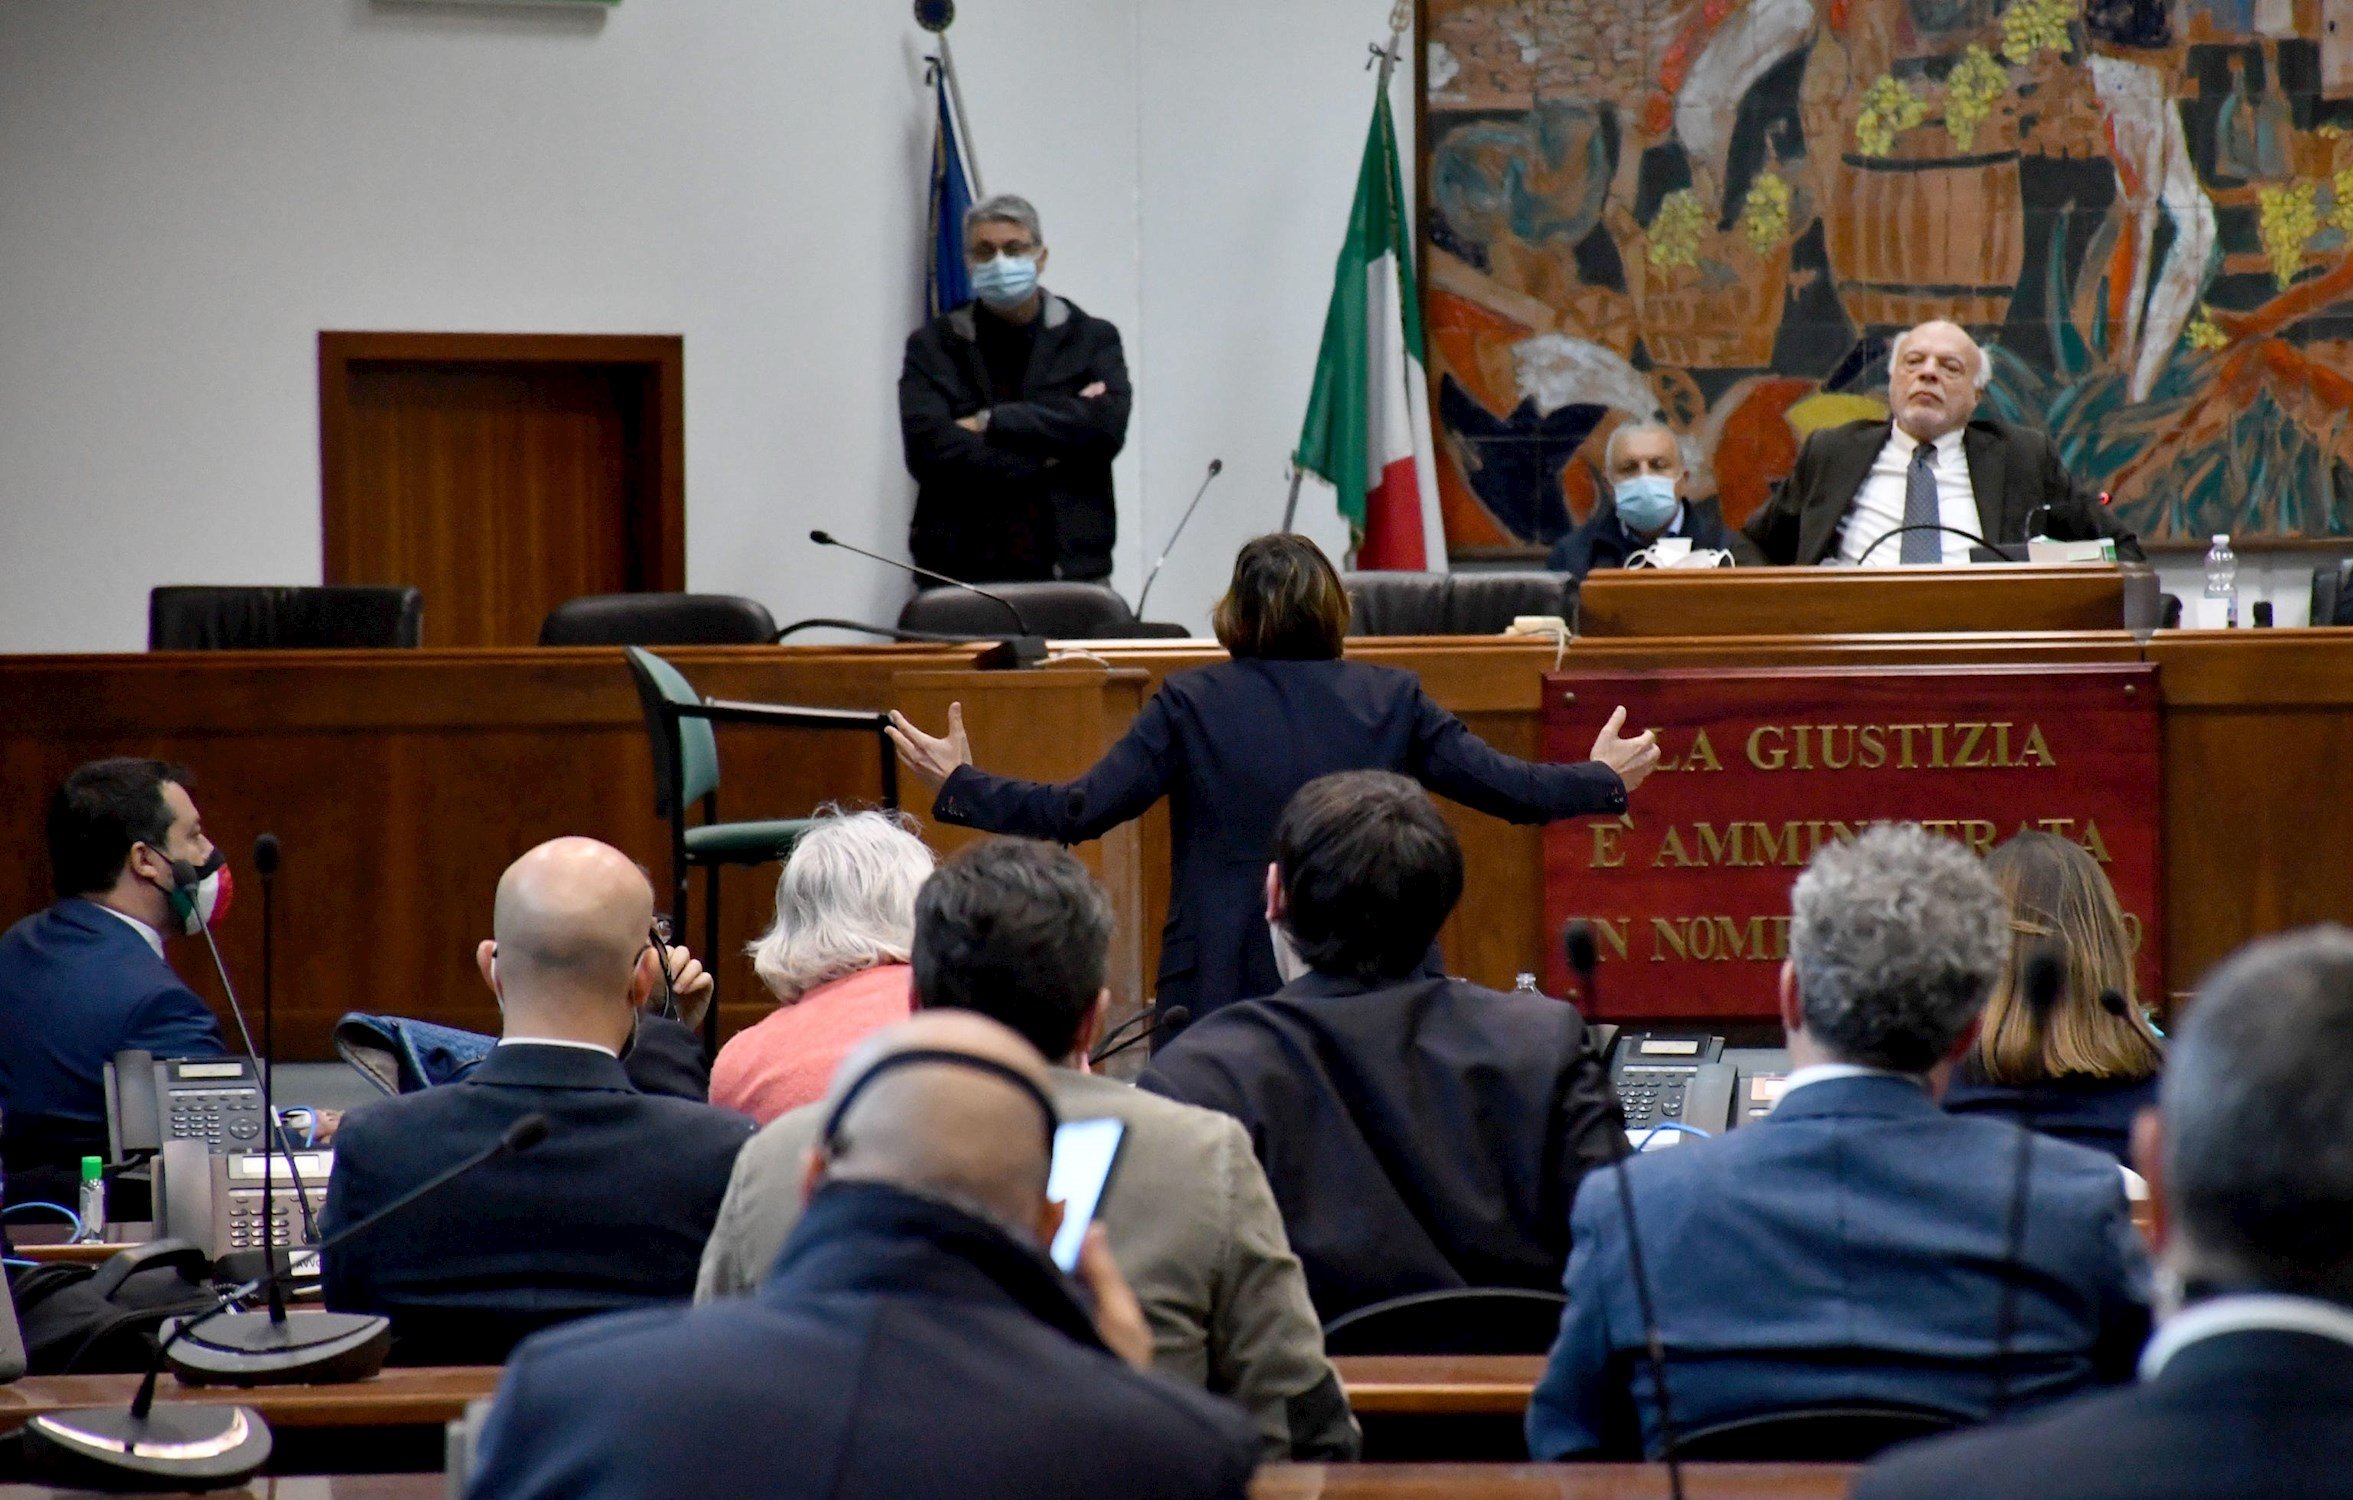 Matteo Salvini será juzgado caso open arms secuestro / EFE